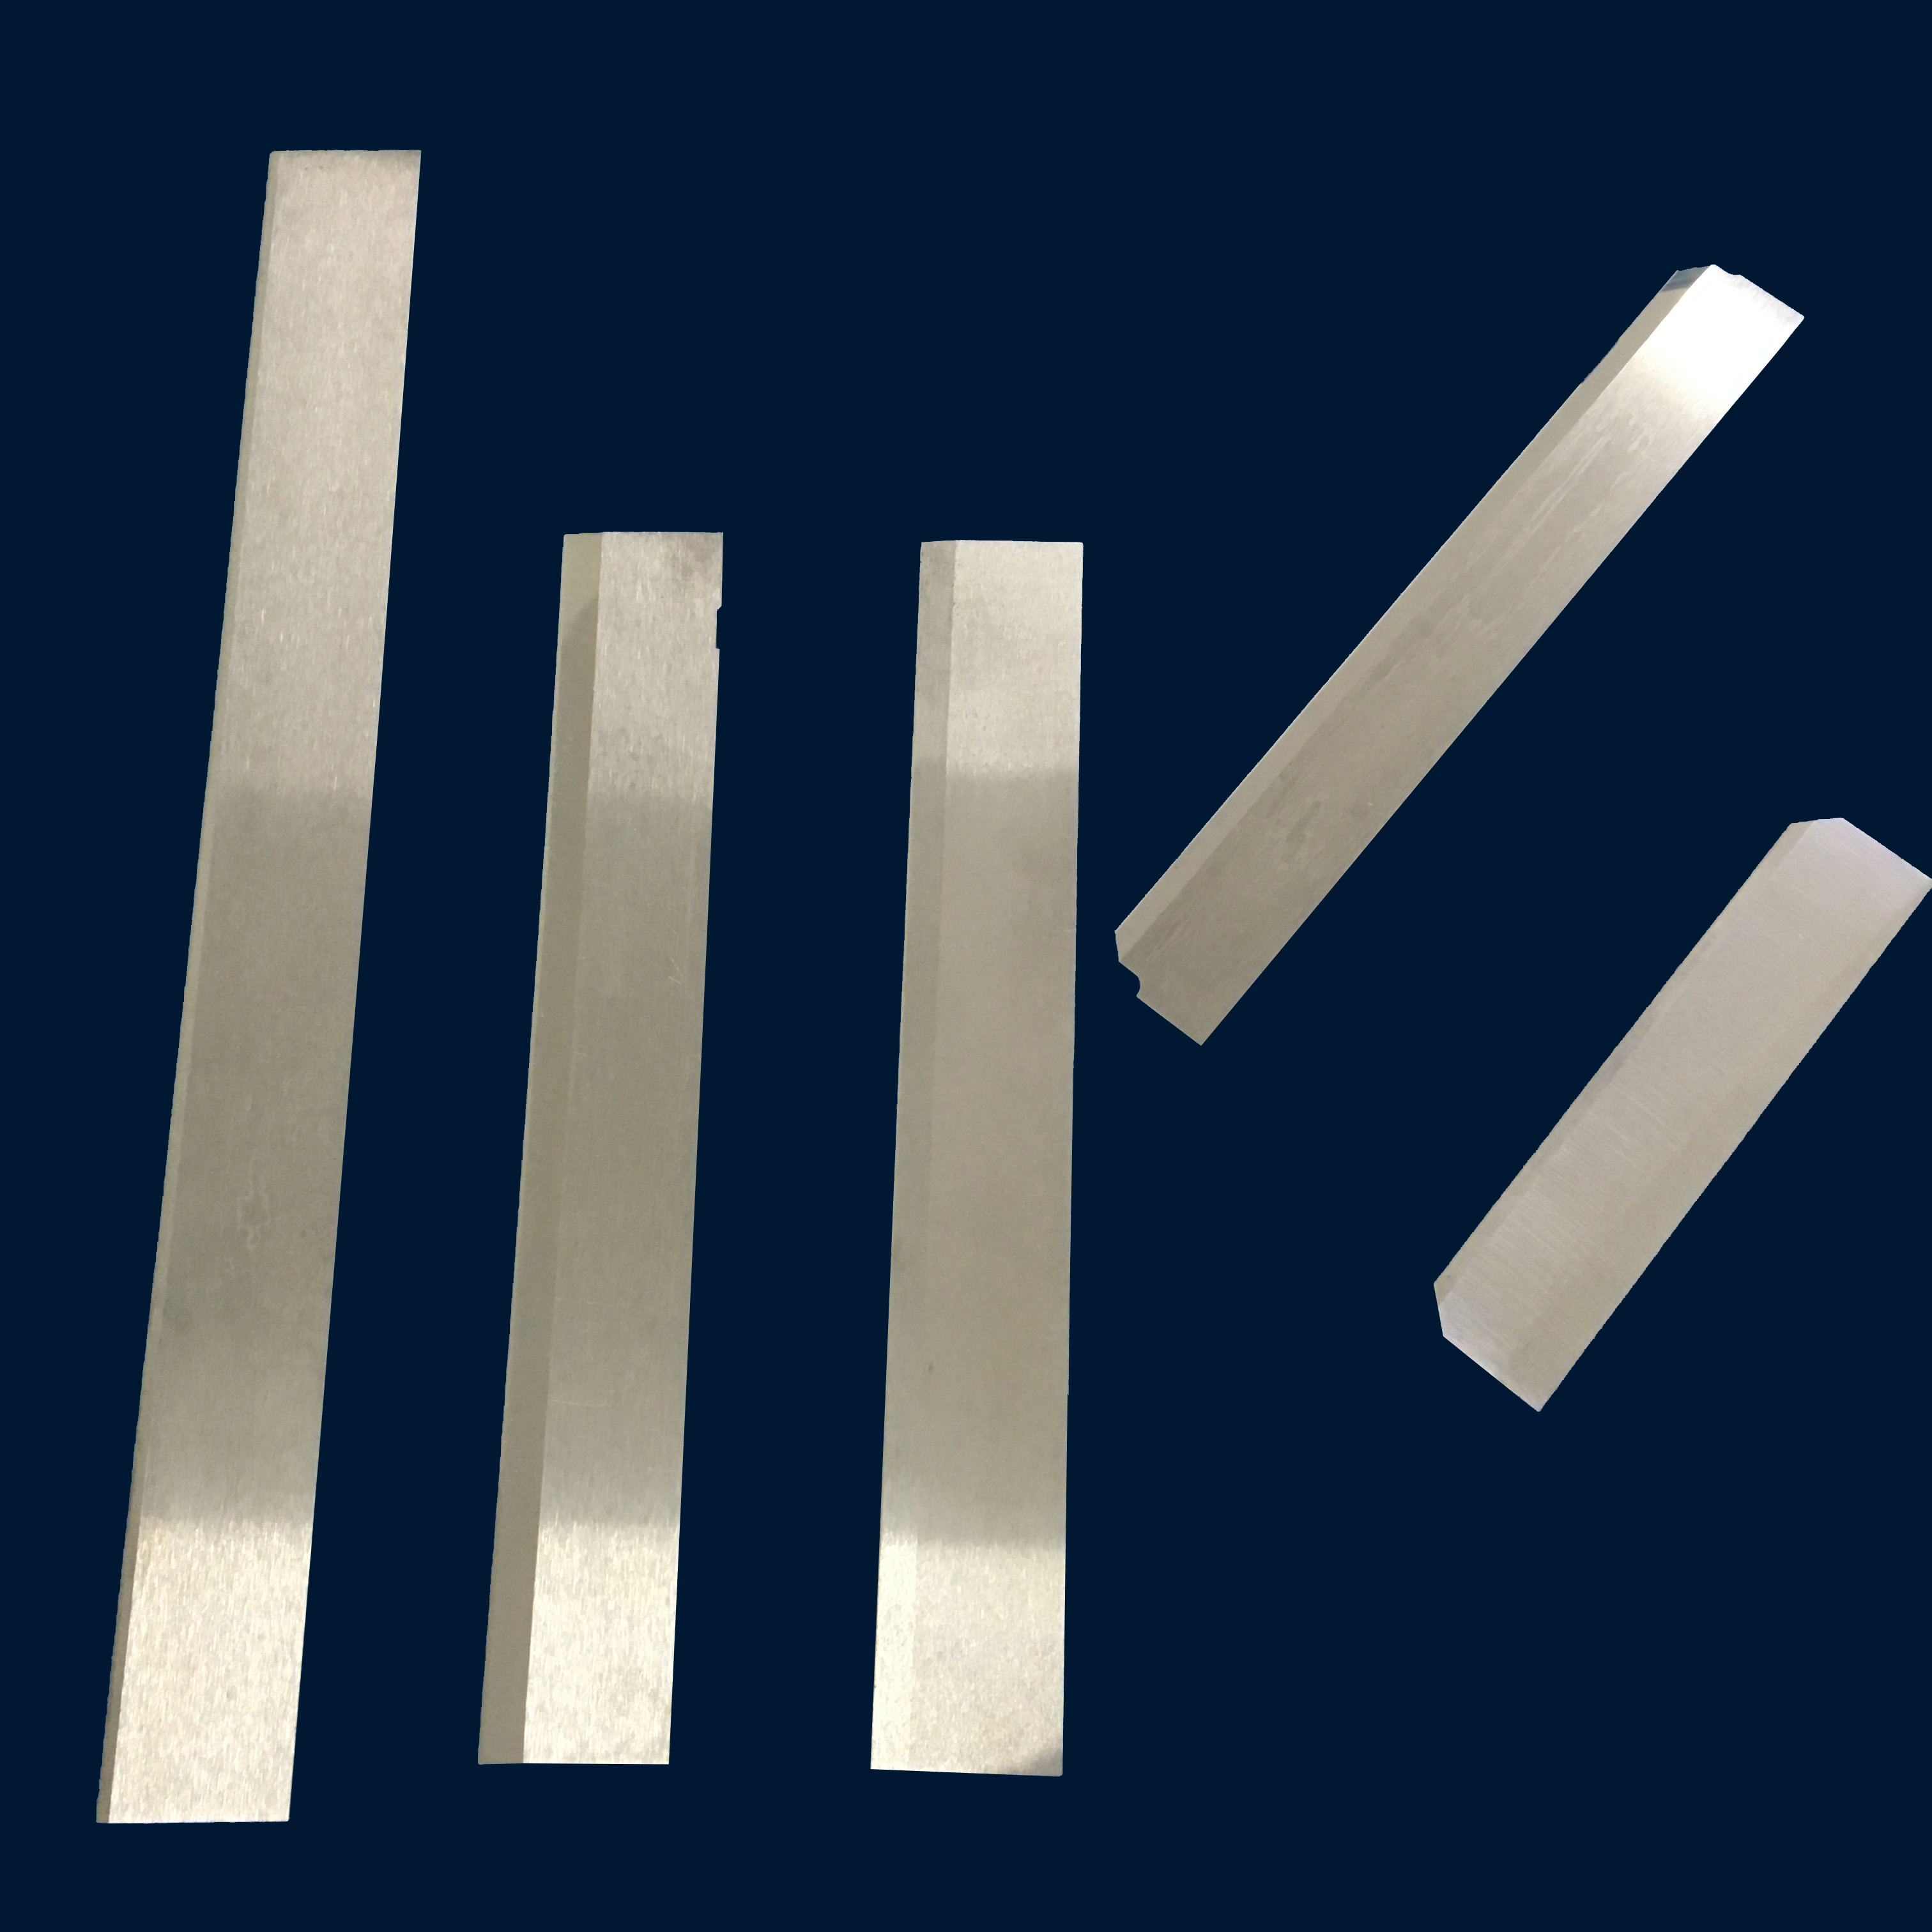 Tungsten Carbide chemical fiber cutter blades